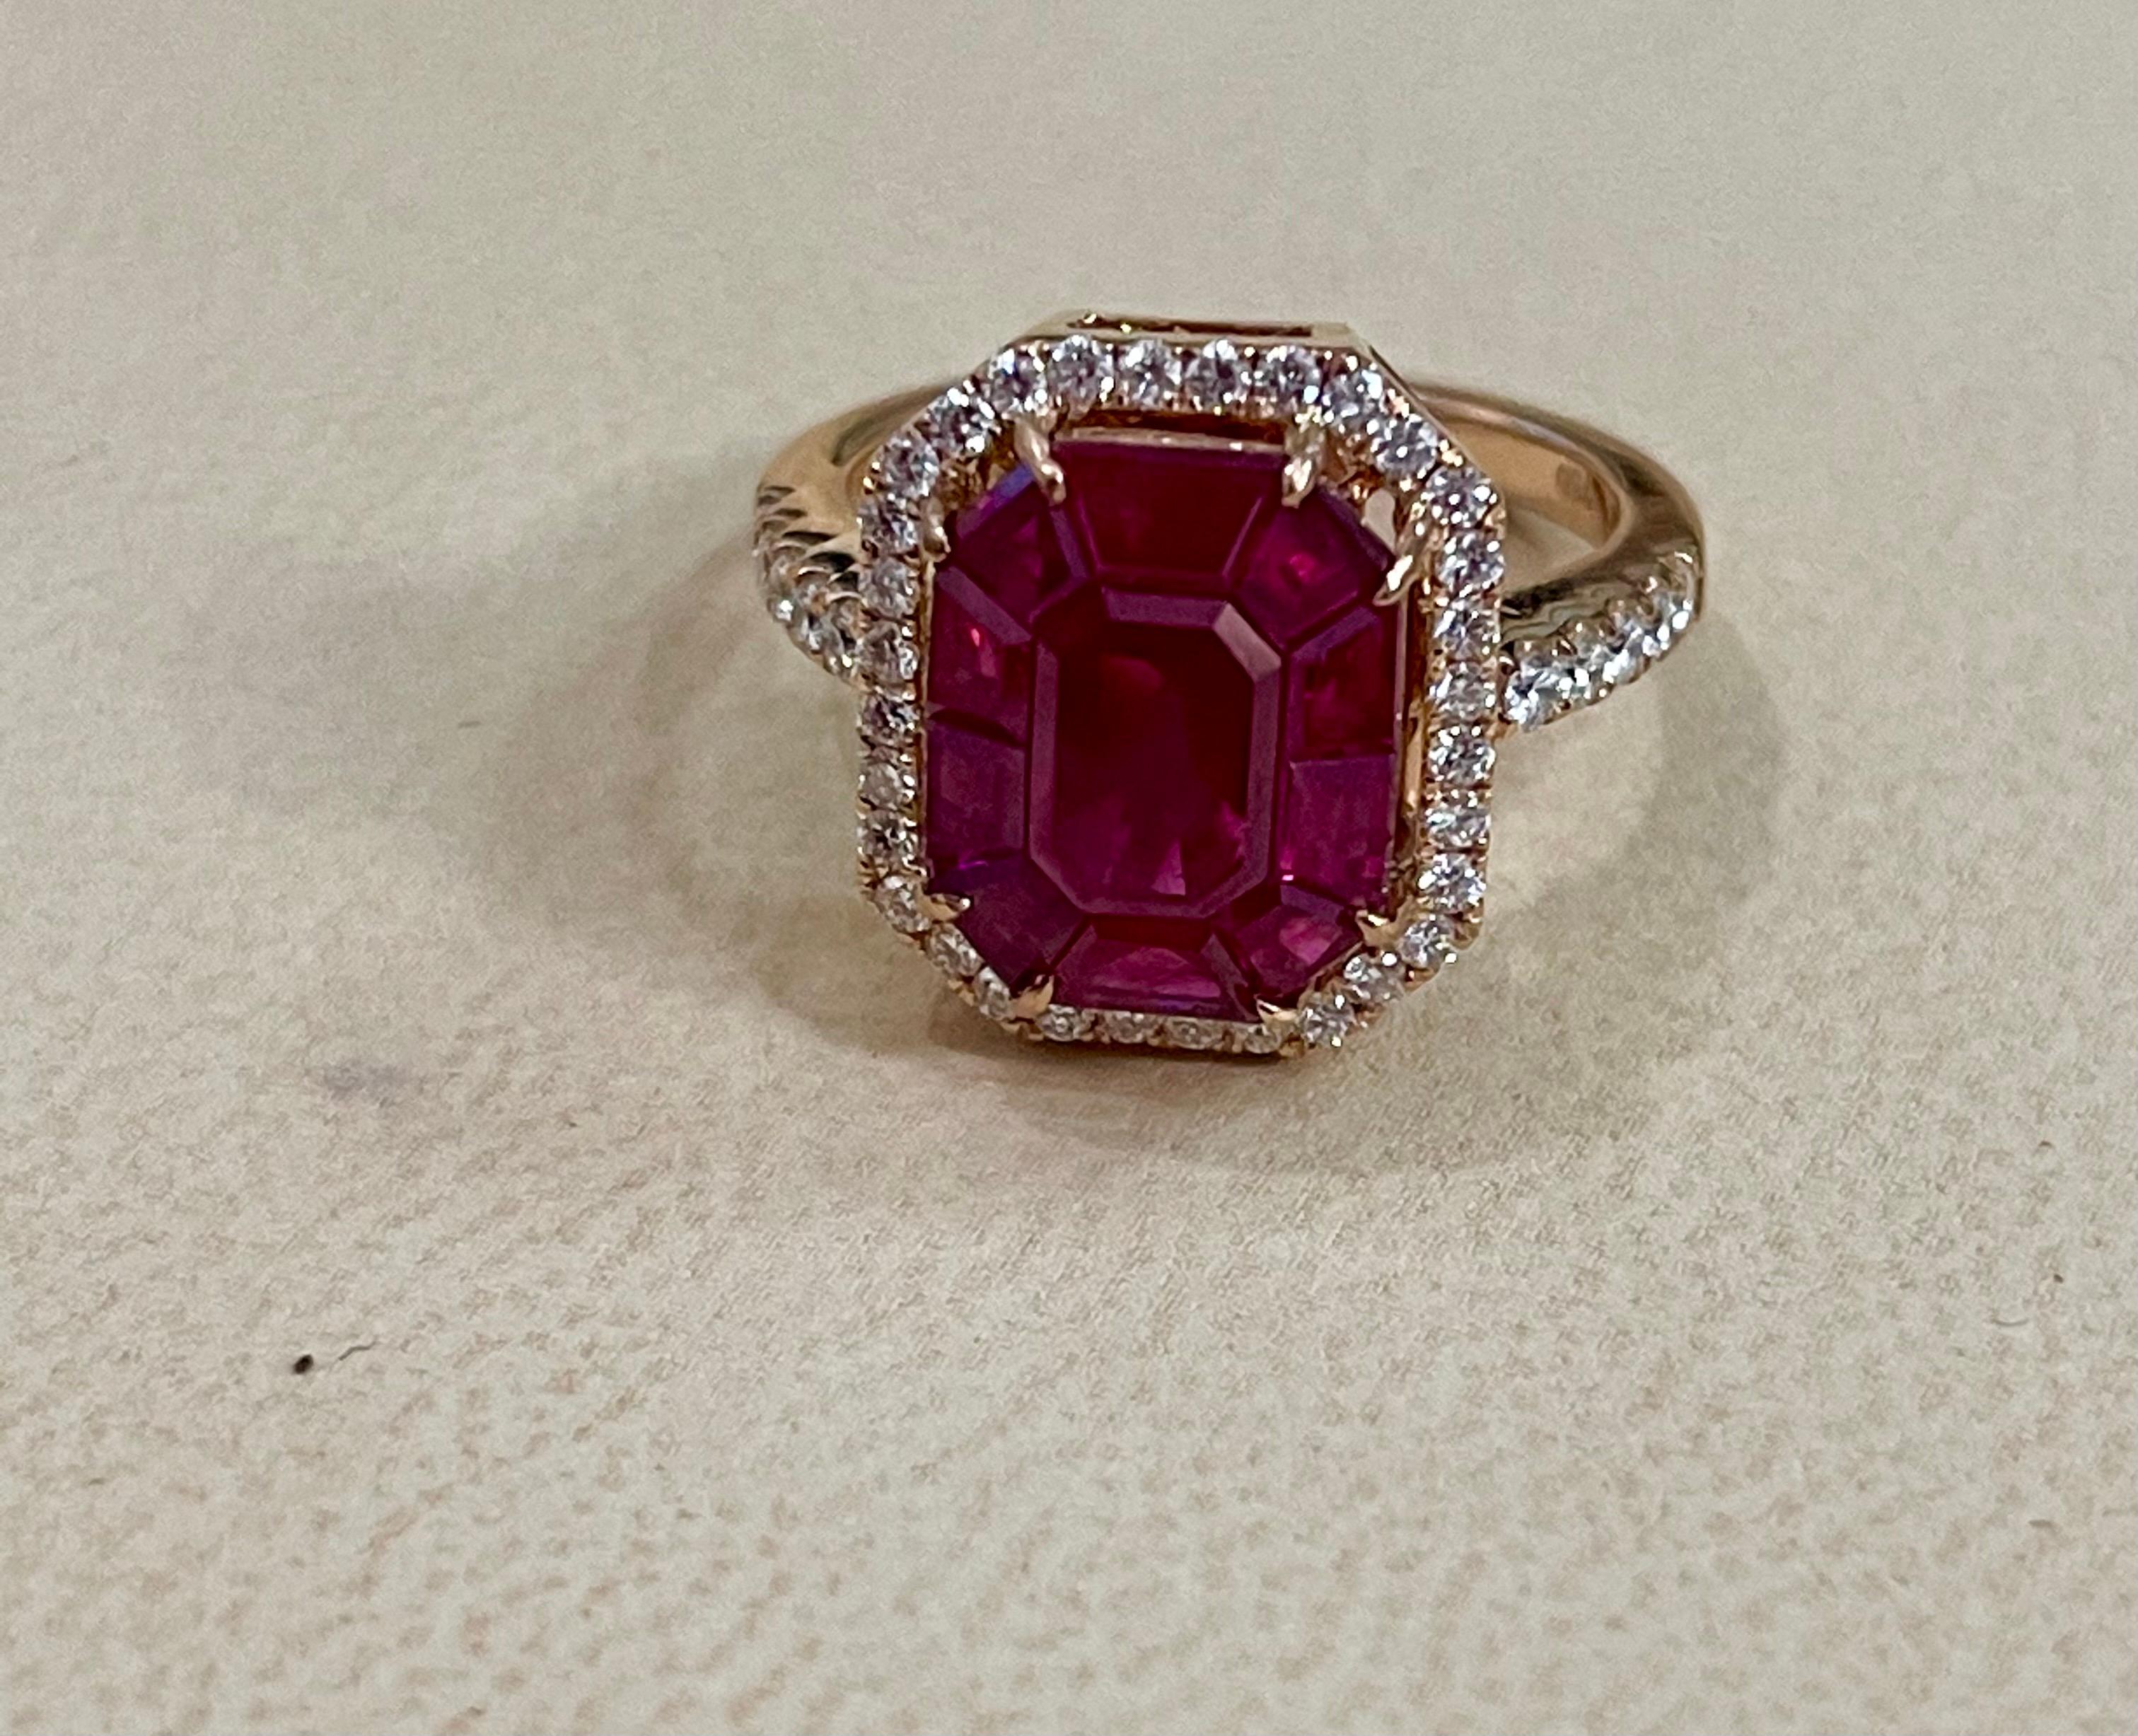 Emerald Cut 6 Carat Natural Burma Ruby and Diamond Ring in 18 Karat Yellow Gold